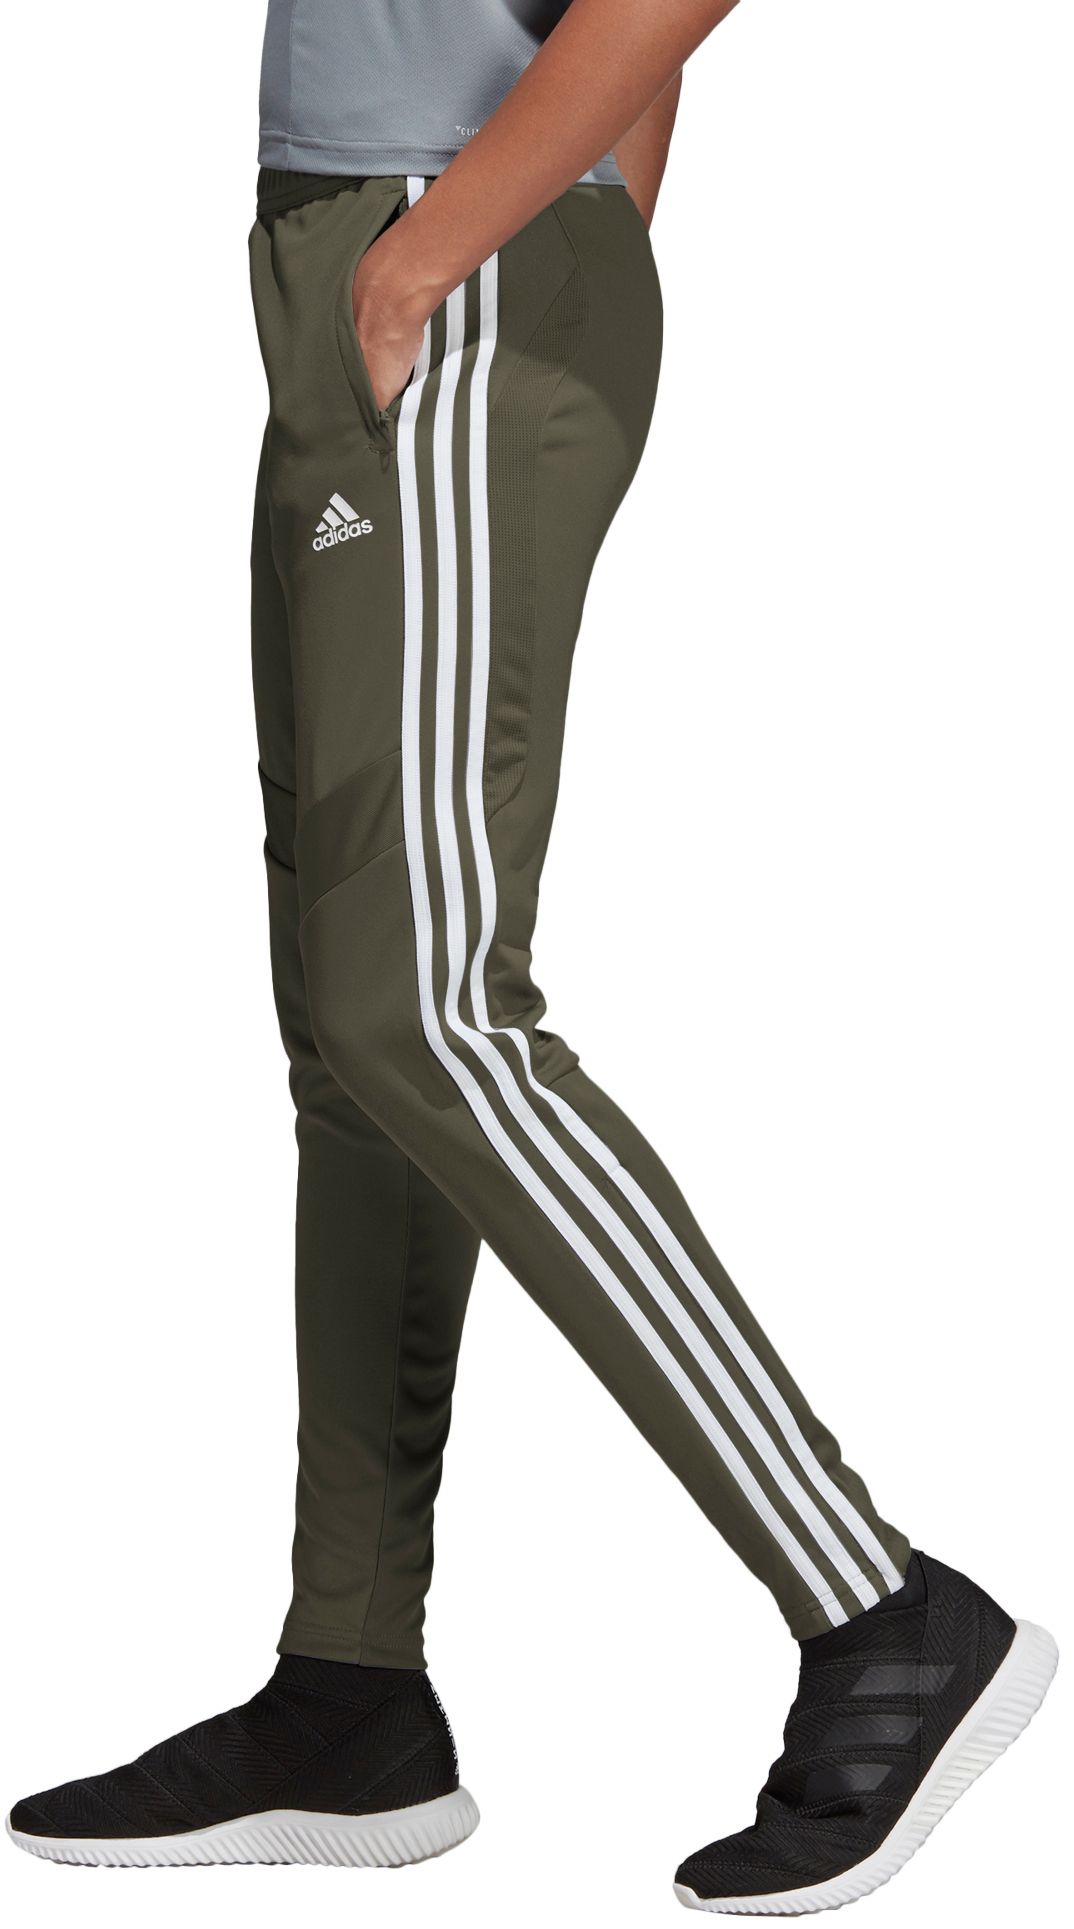 adidas women's tiro 19 soccer training pants